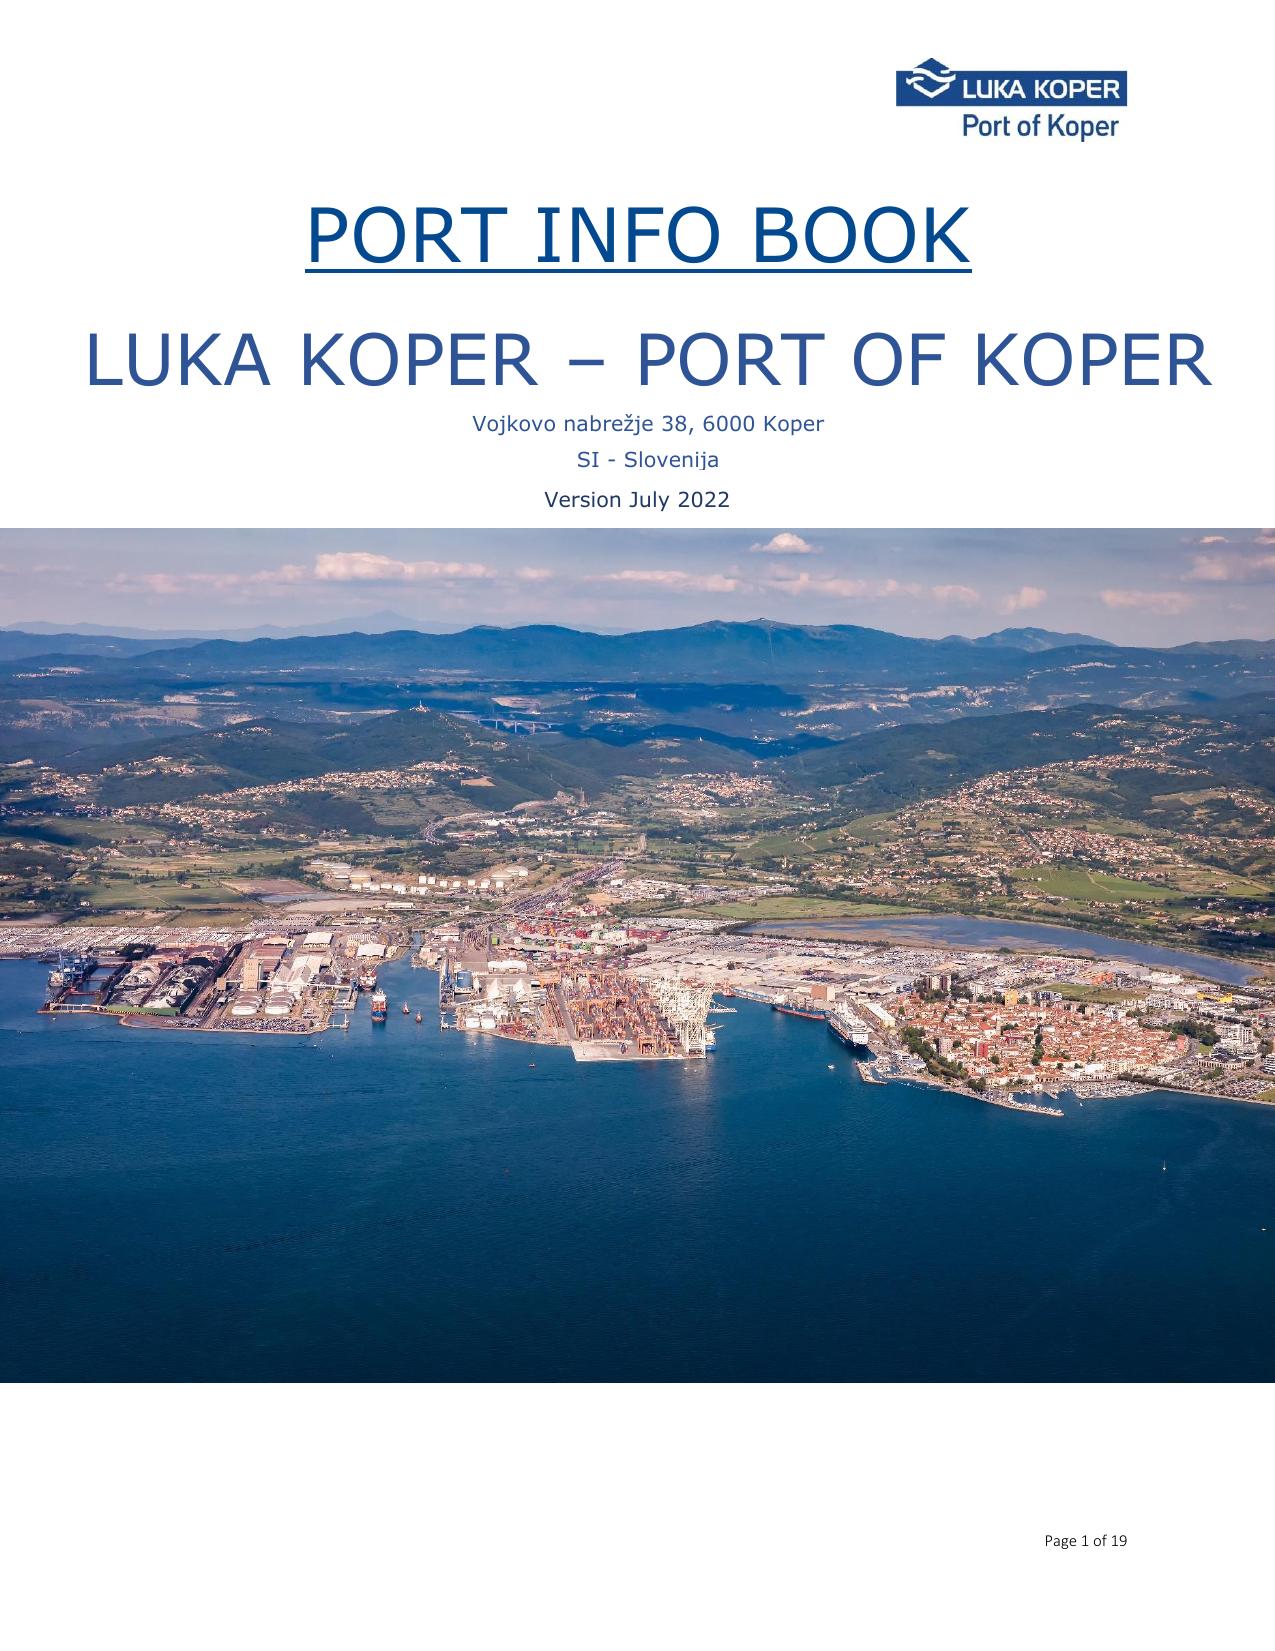 port info book by Sluzba PR1;Davorin.Petaros@luka-kp.si